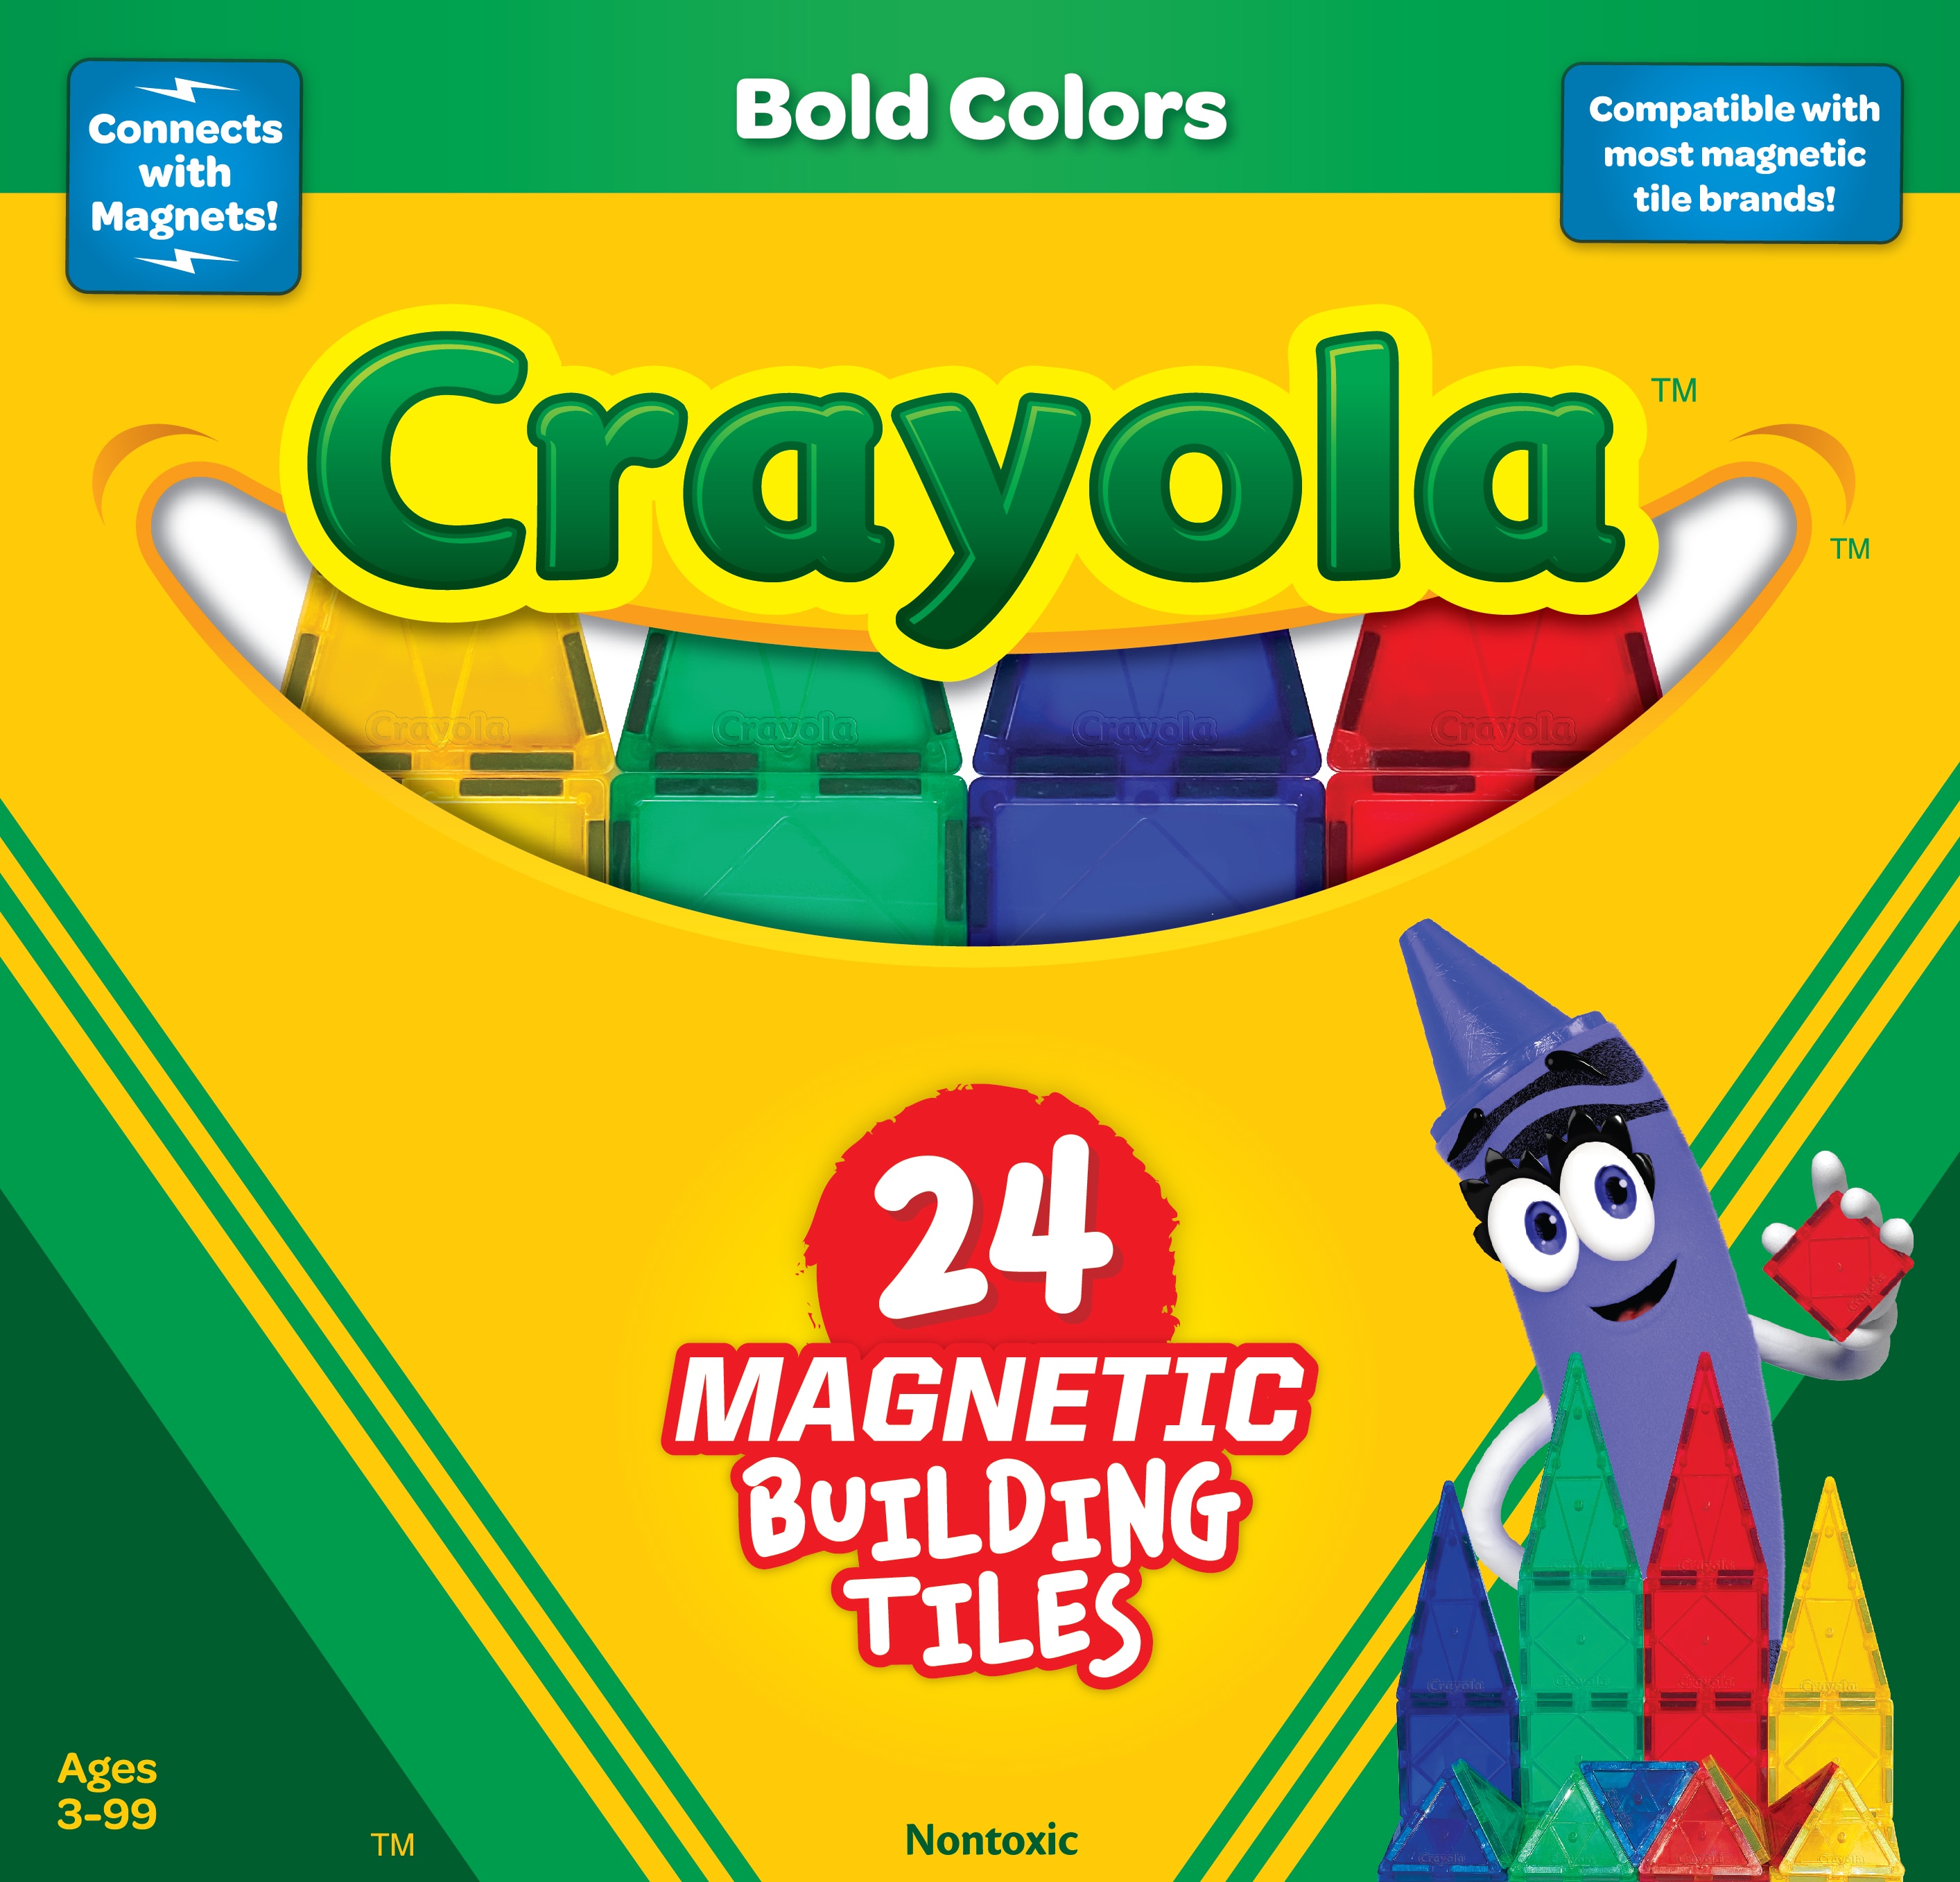 Crayola Bathtub Markers (Pack of 6)